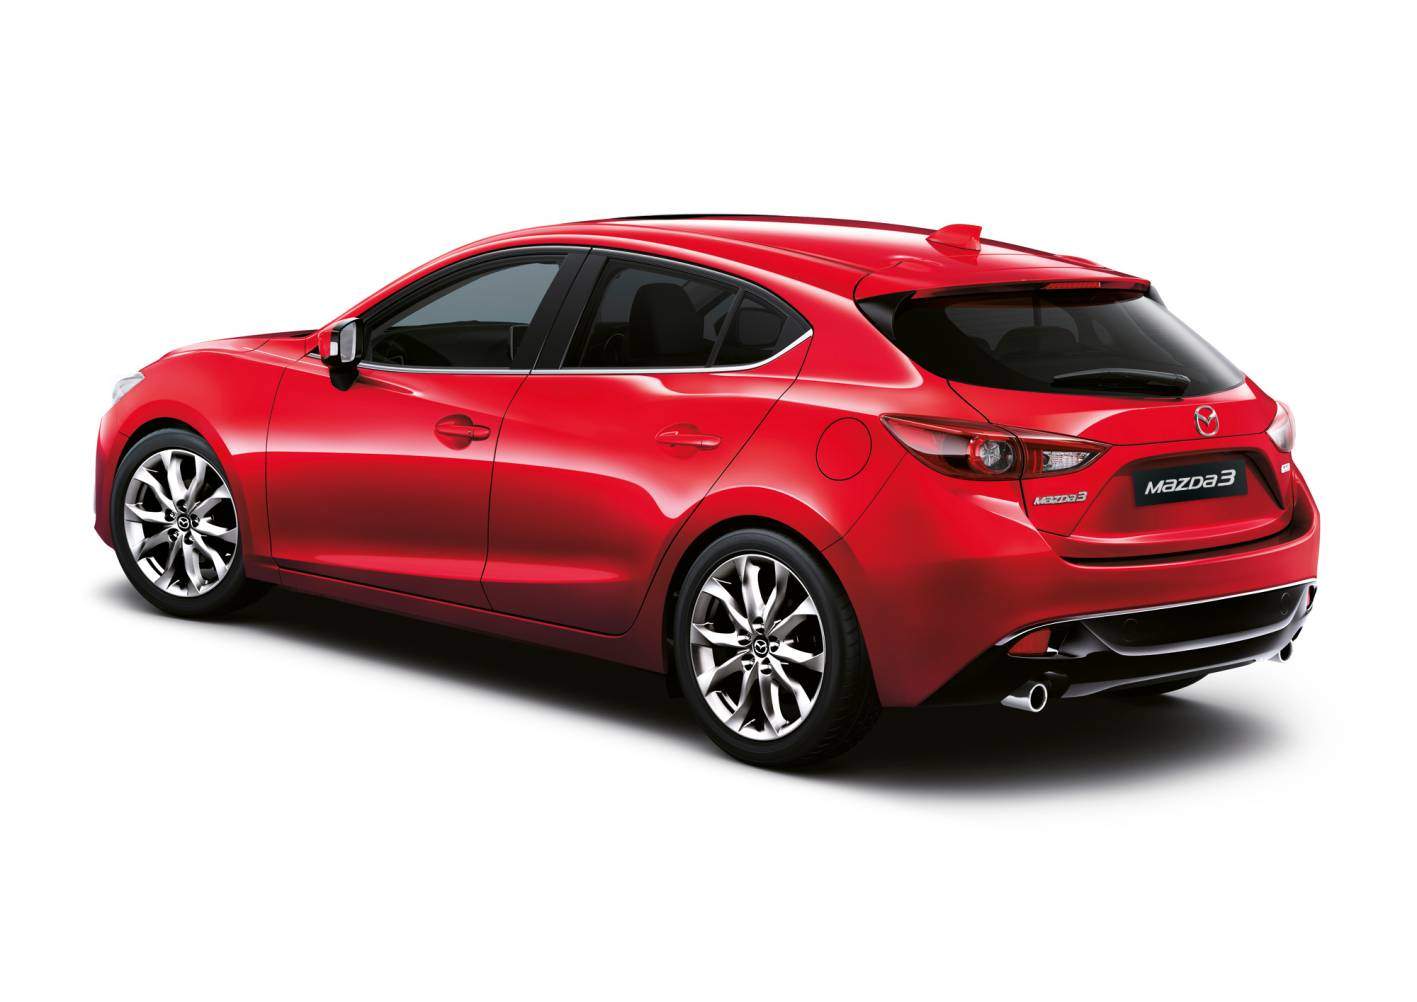 New Mazda3 unveiled